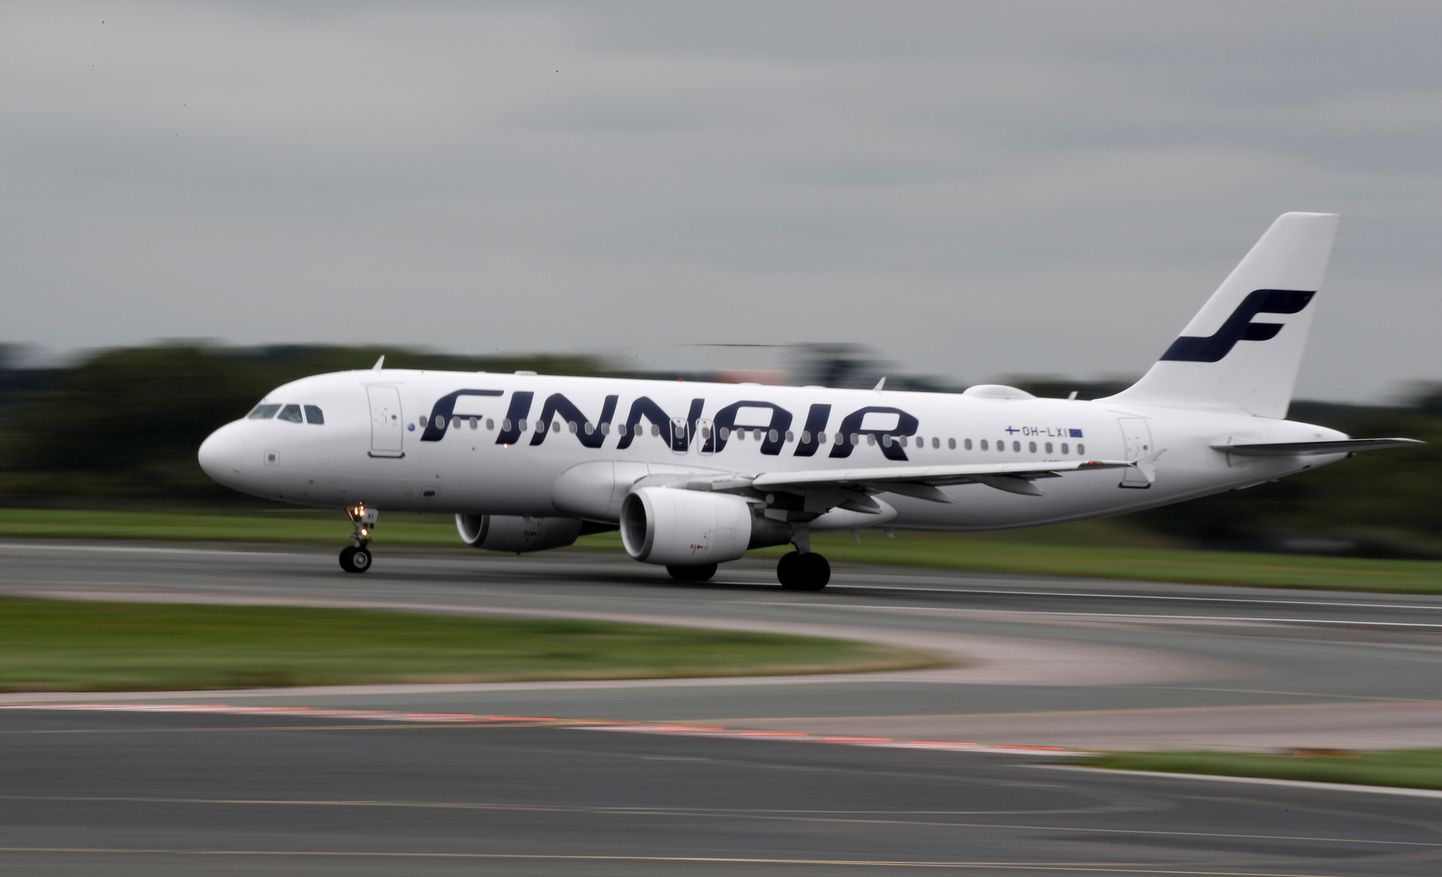 Finnairi lennuk.